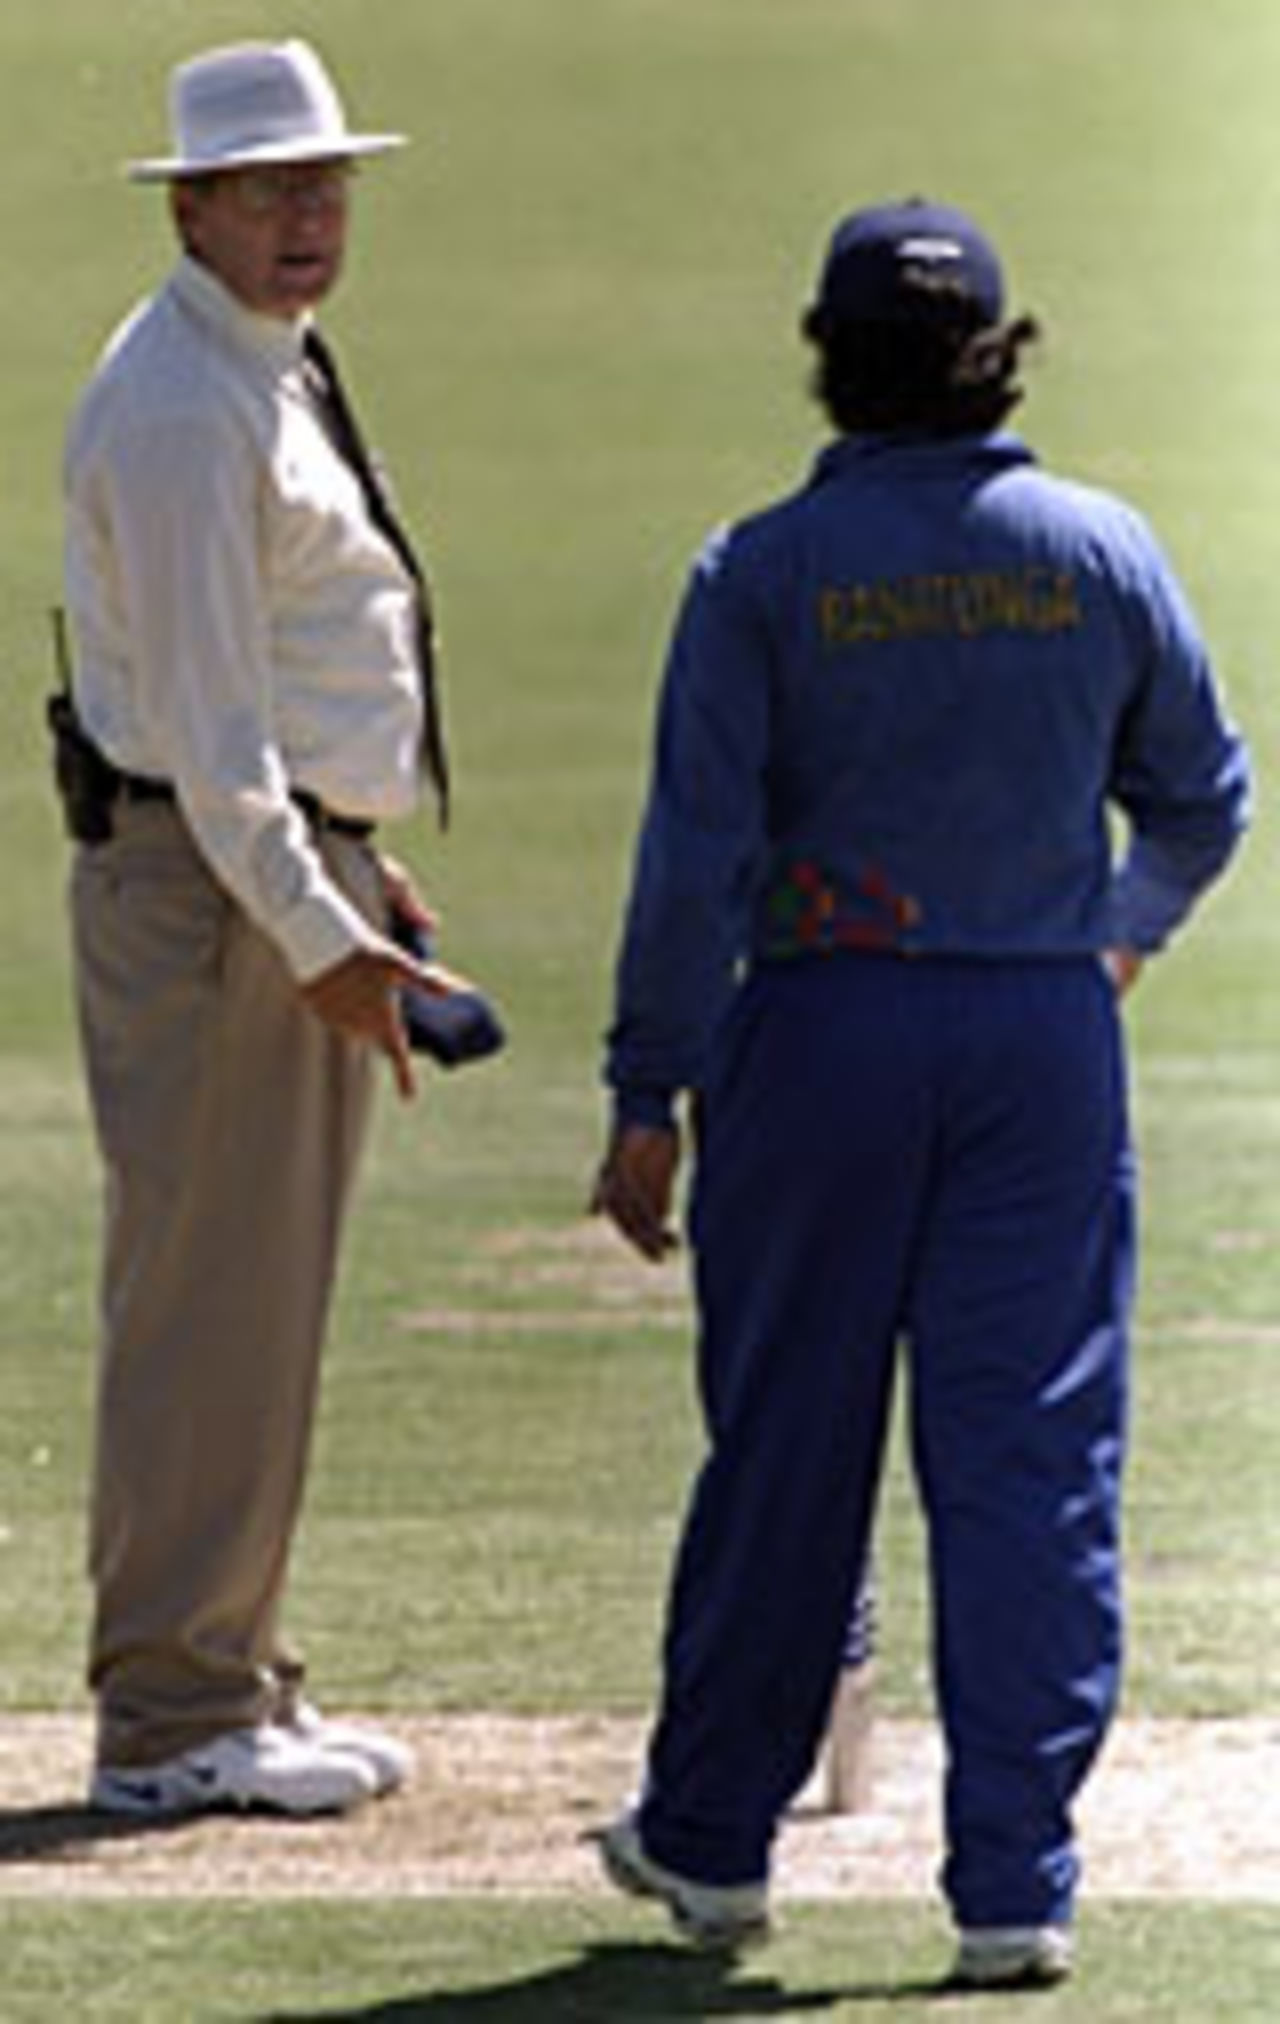 Arjuna Ranatunga argues with Ross Emerson after a no-ball incident, England v Sri Lanka, Adelaide, January 1999